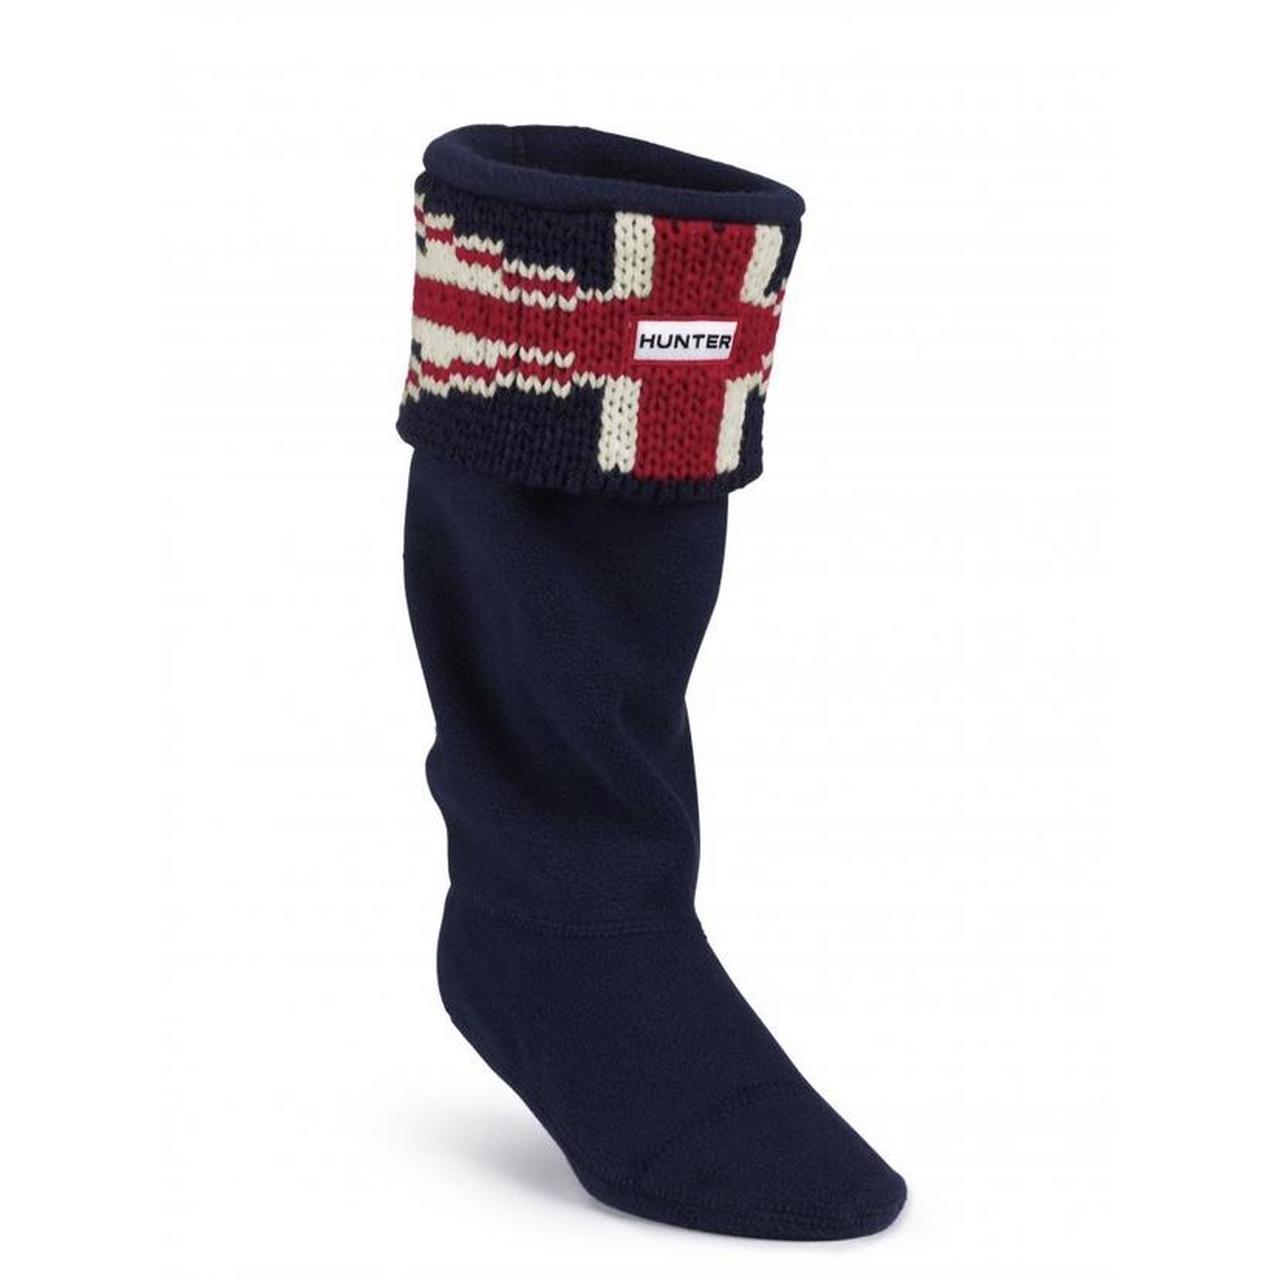 Union Jack Hunter wellie socks Brand new Never... - Depop